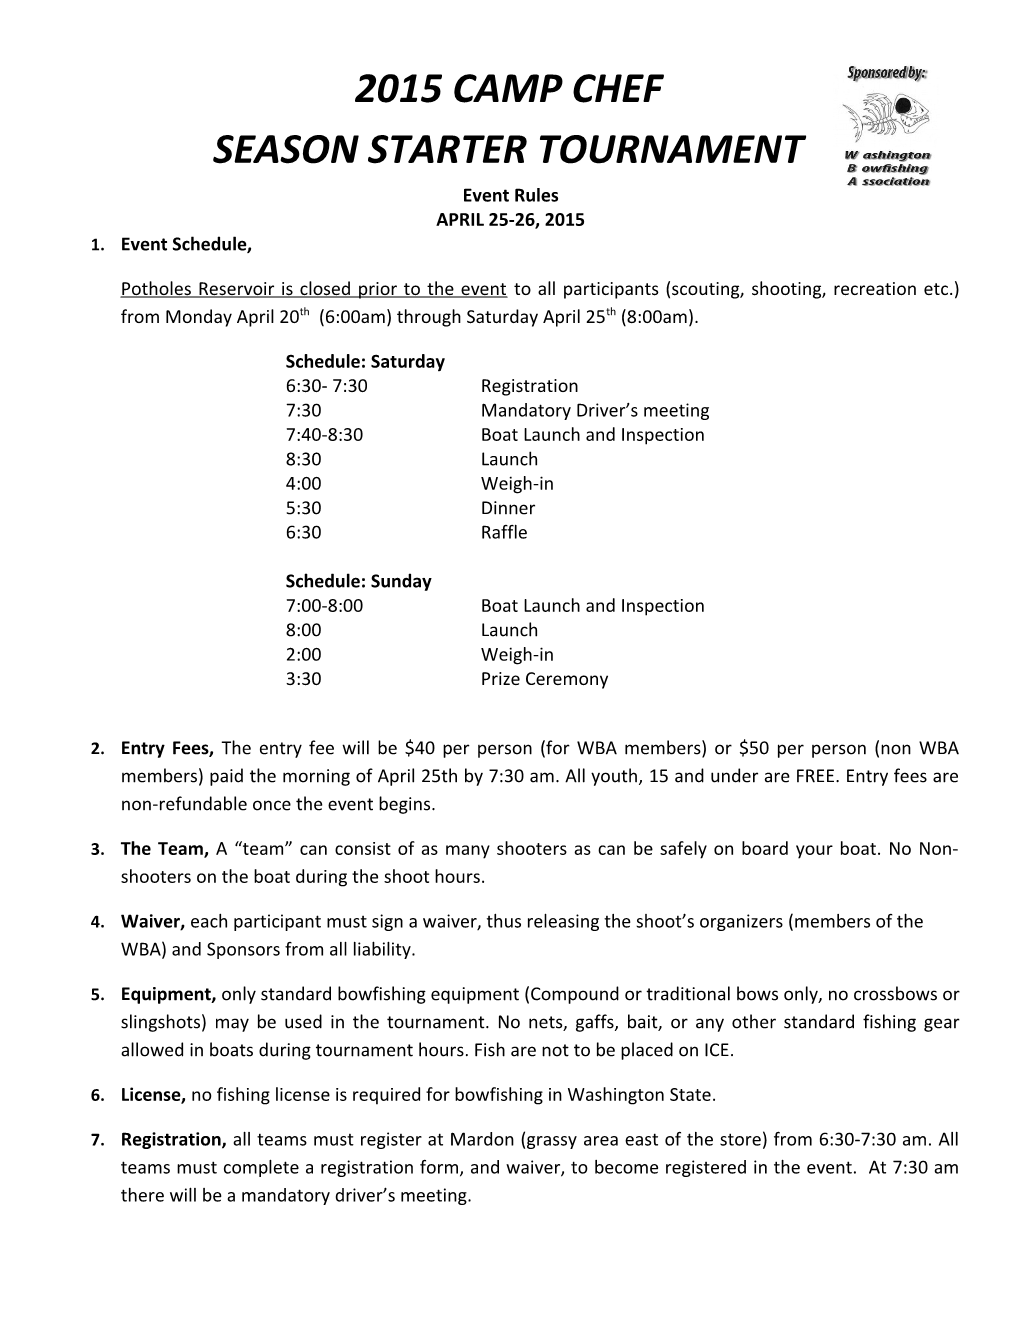 Season Starter Tournament